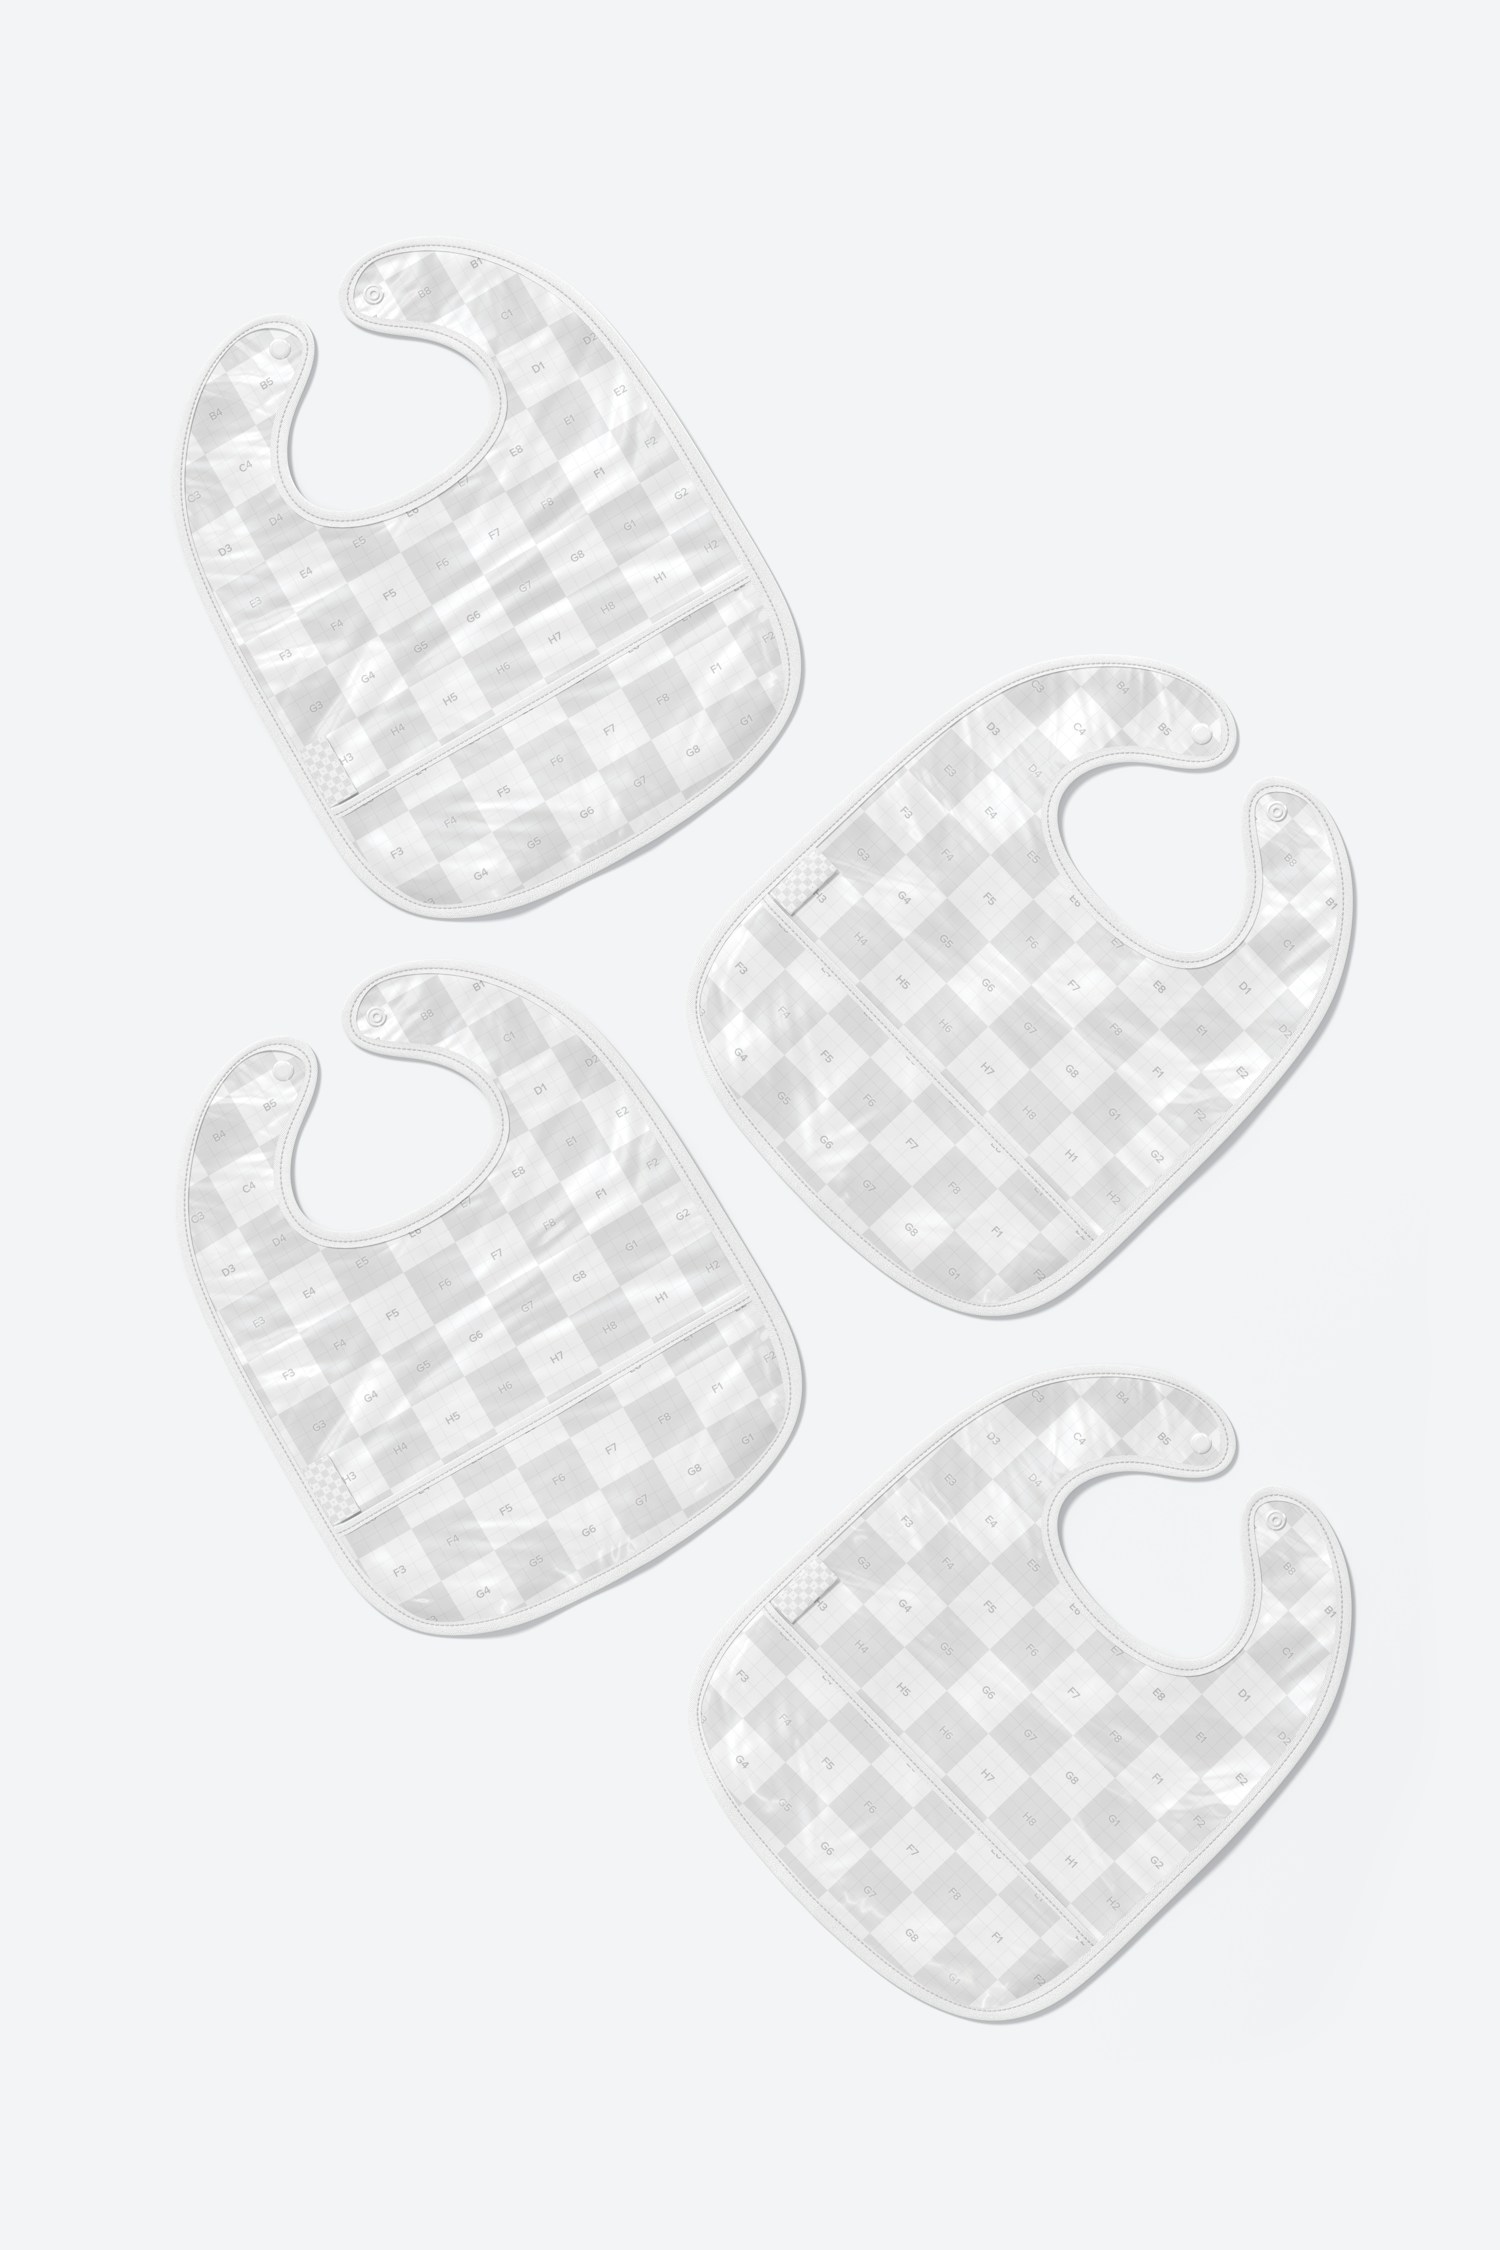 Maqueta de Baberos Plásticos para Bebé